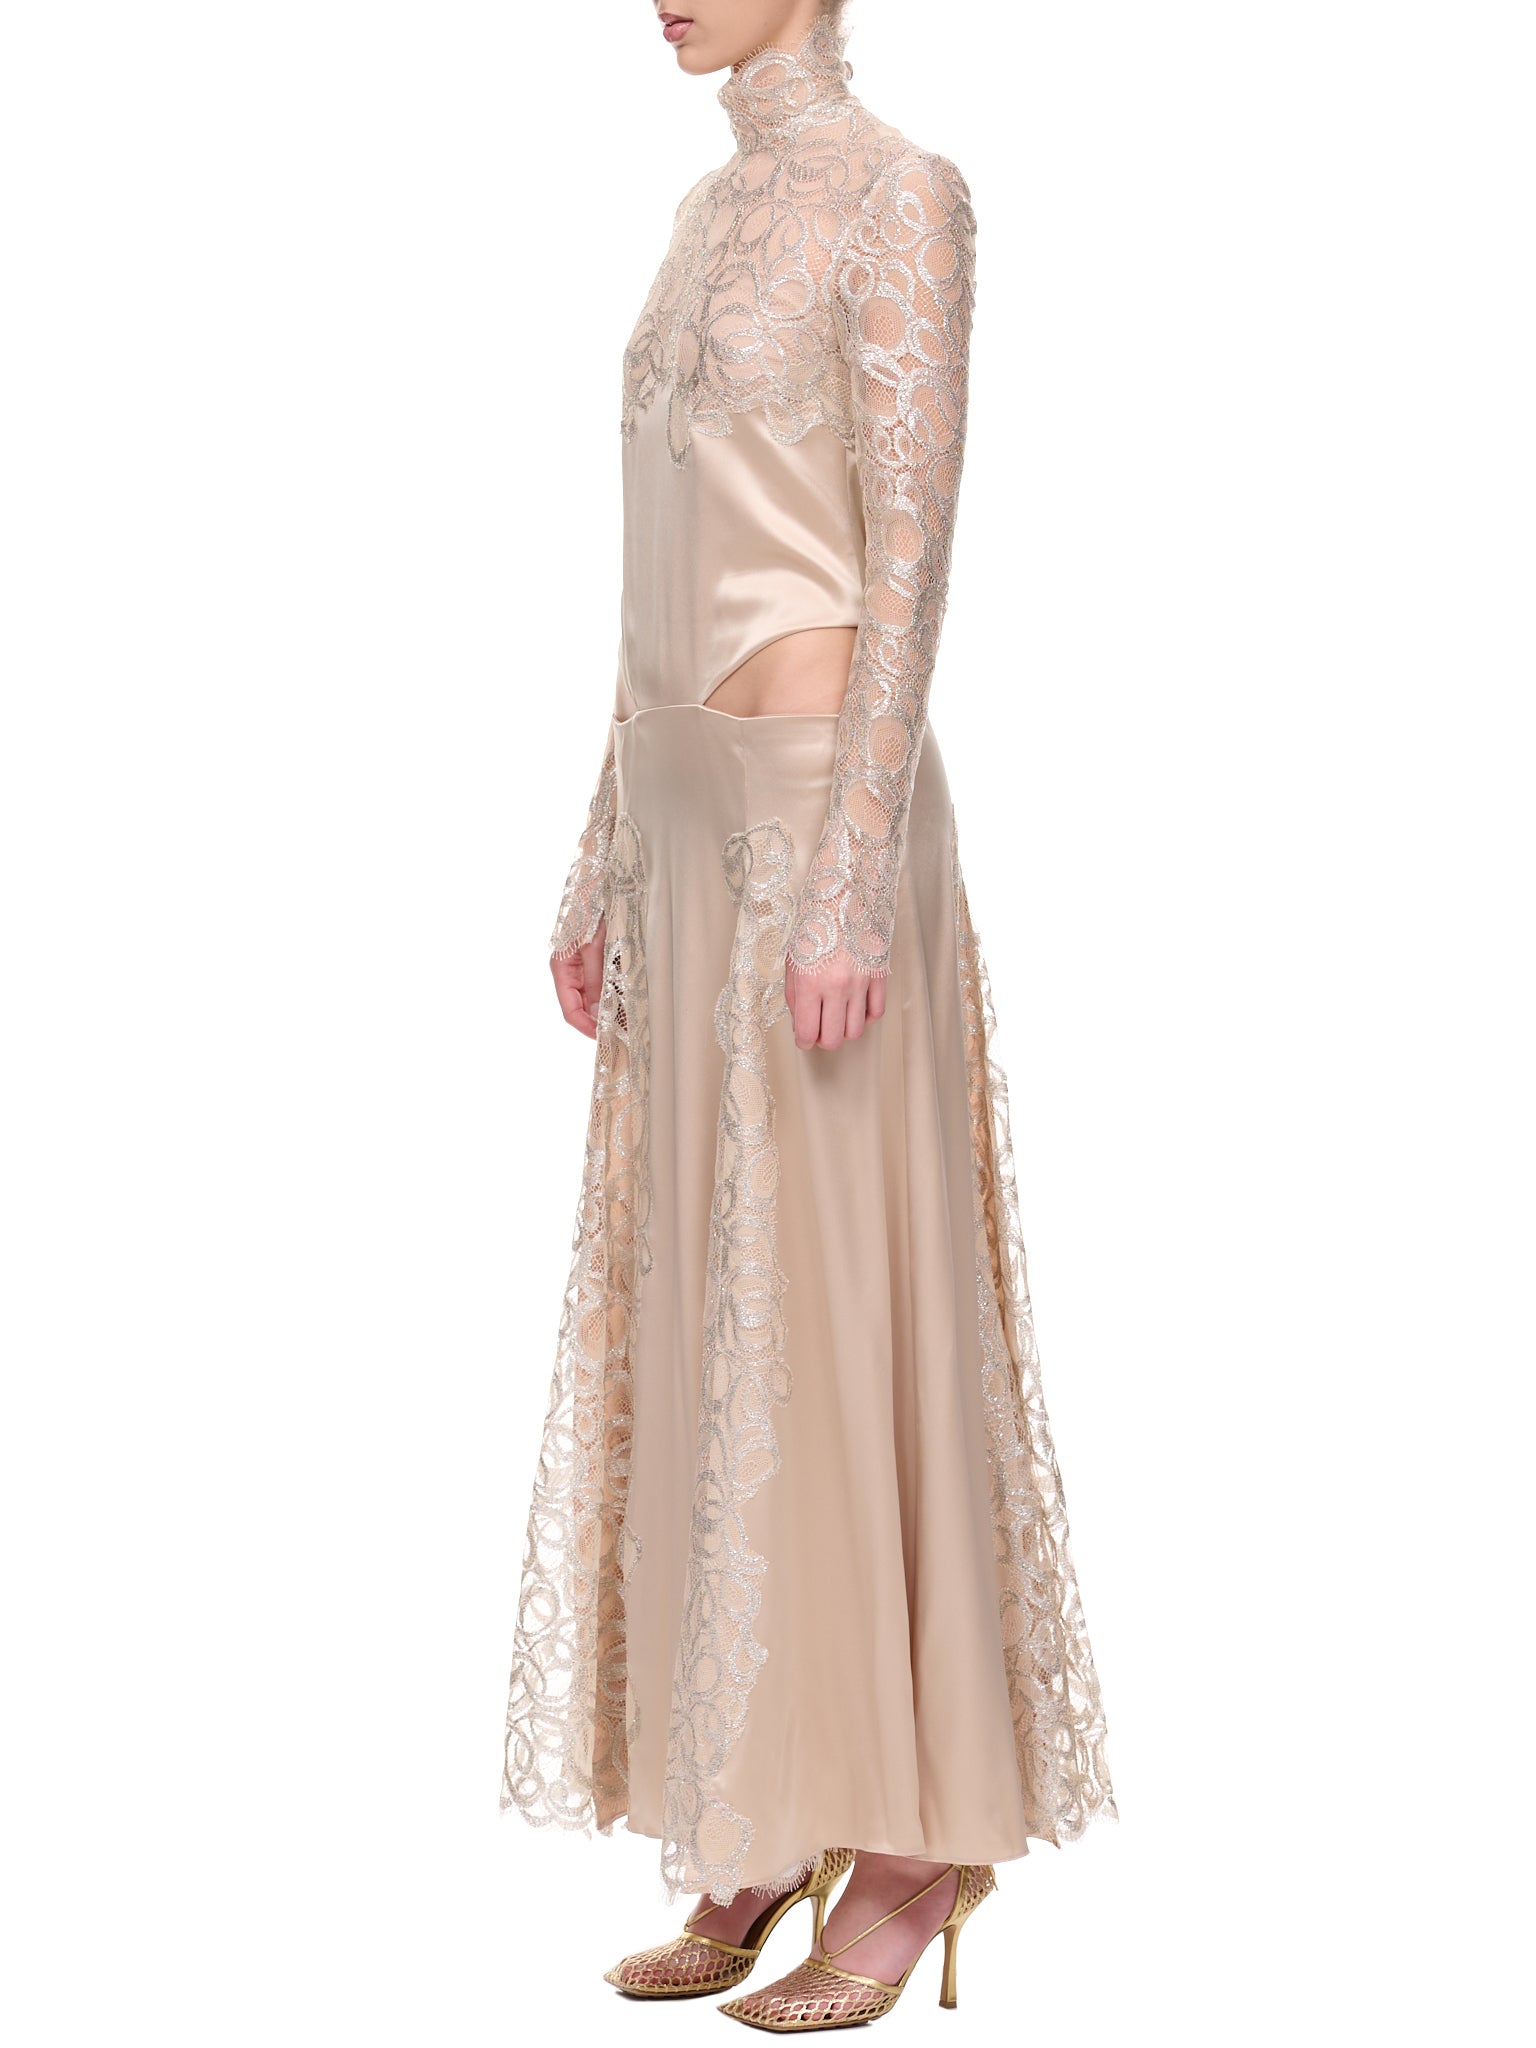 Lace Satin Dress (DR06-WHITE)